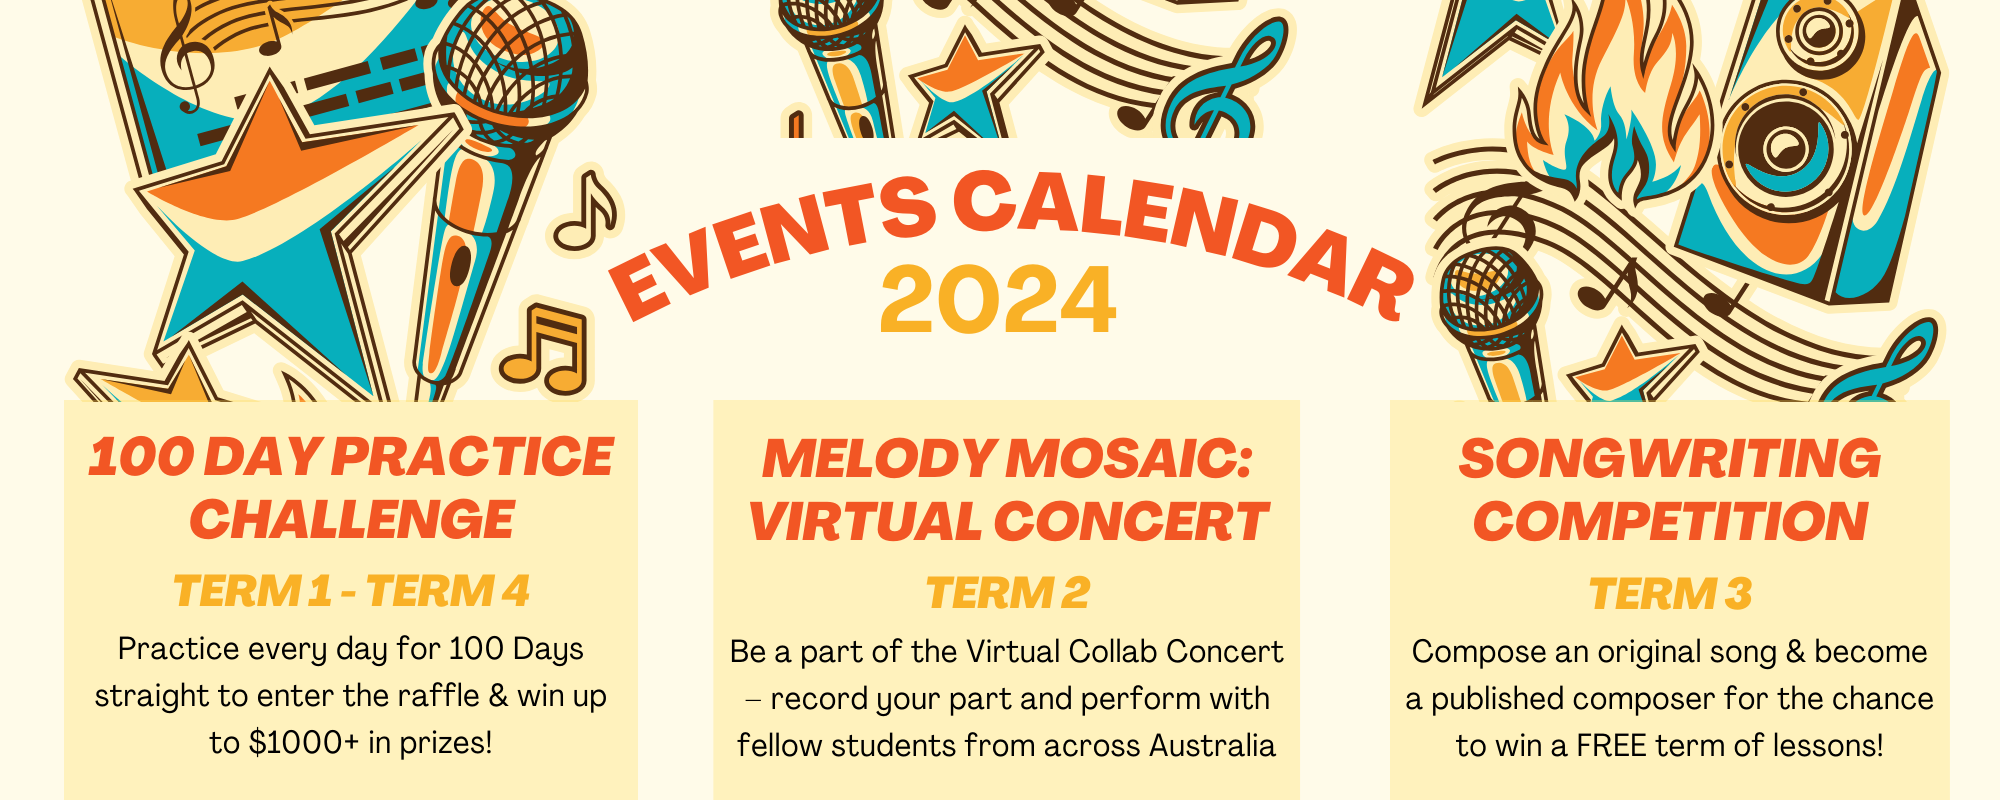 2021 Musical Calendar